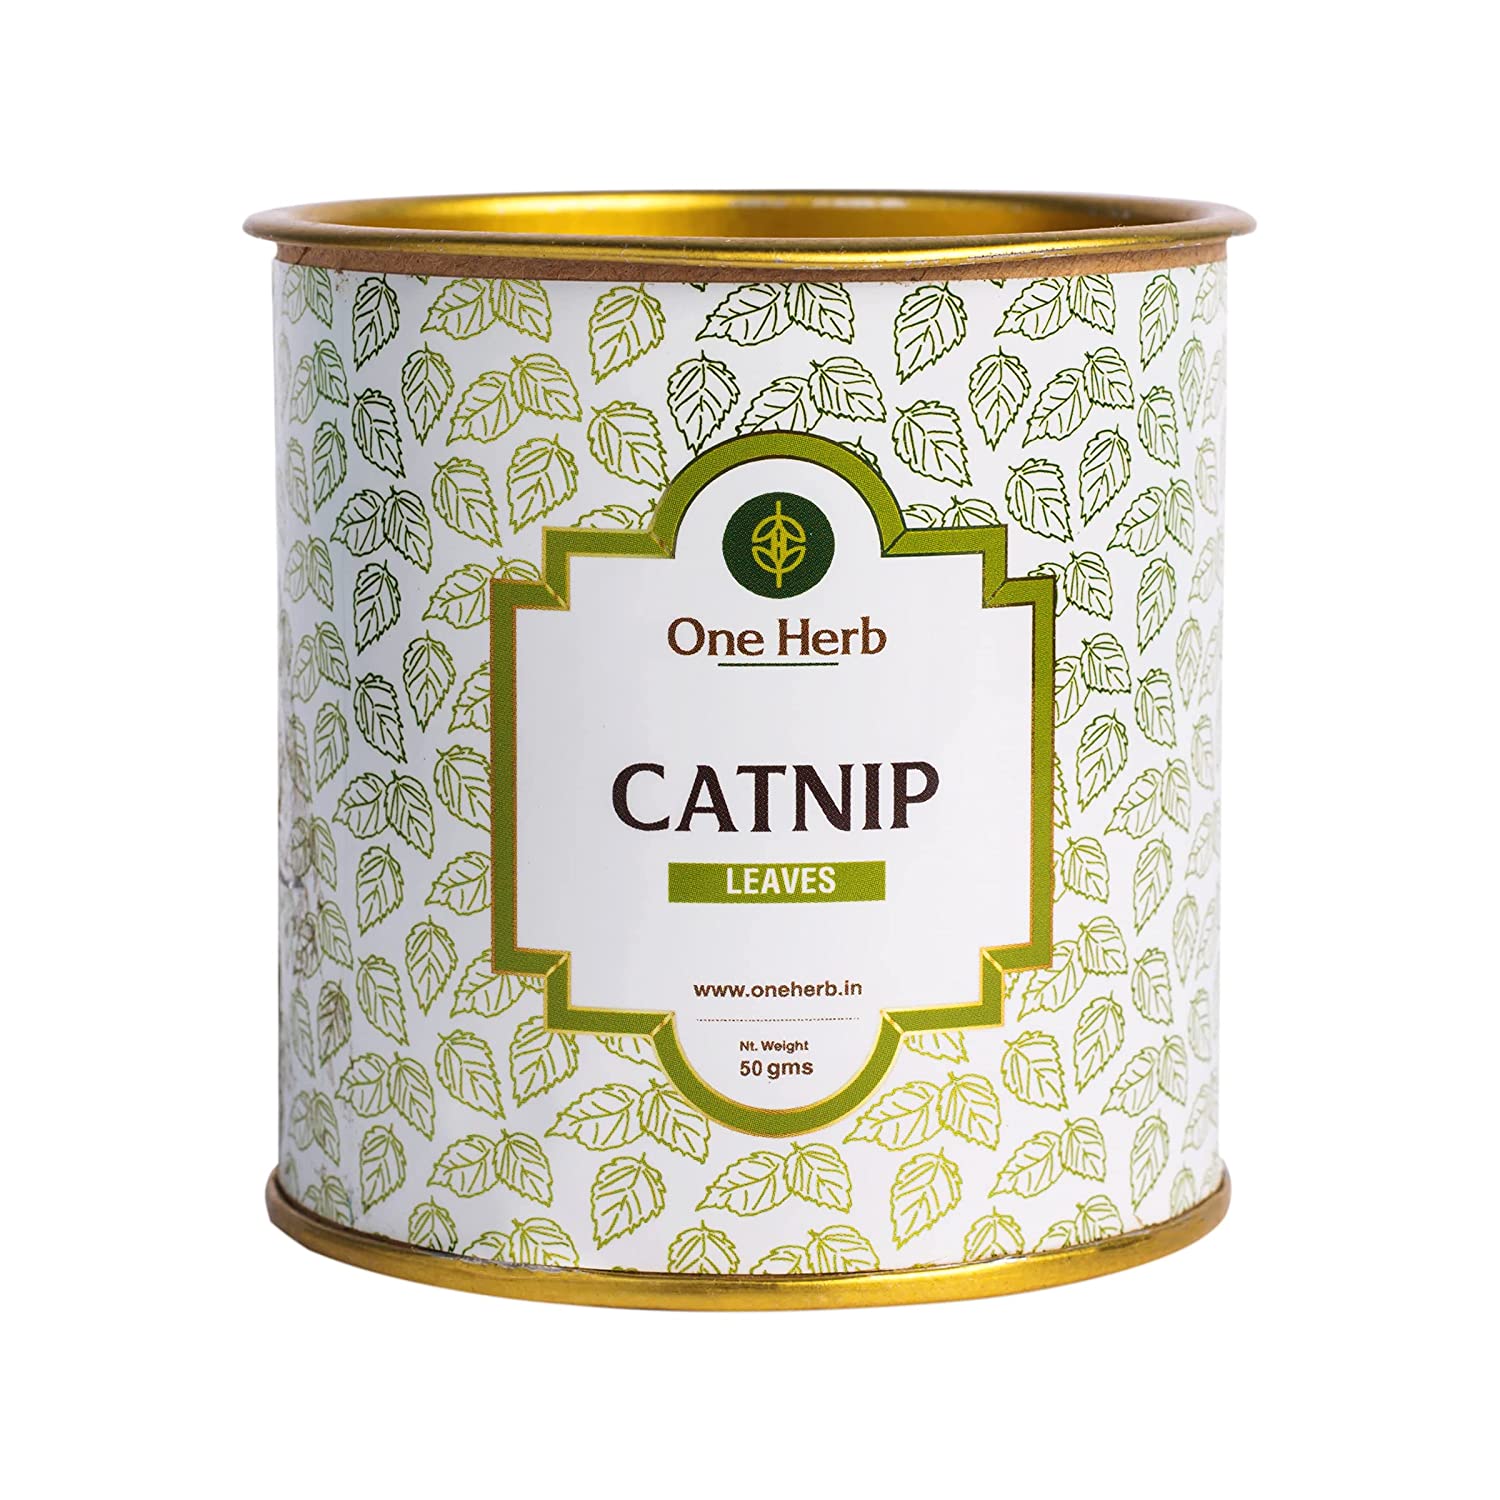 One Herb Catnip Leaves Tea Image